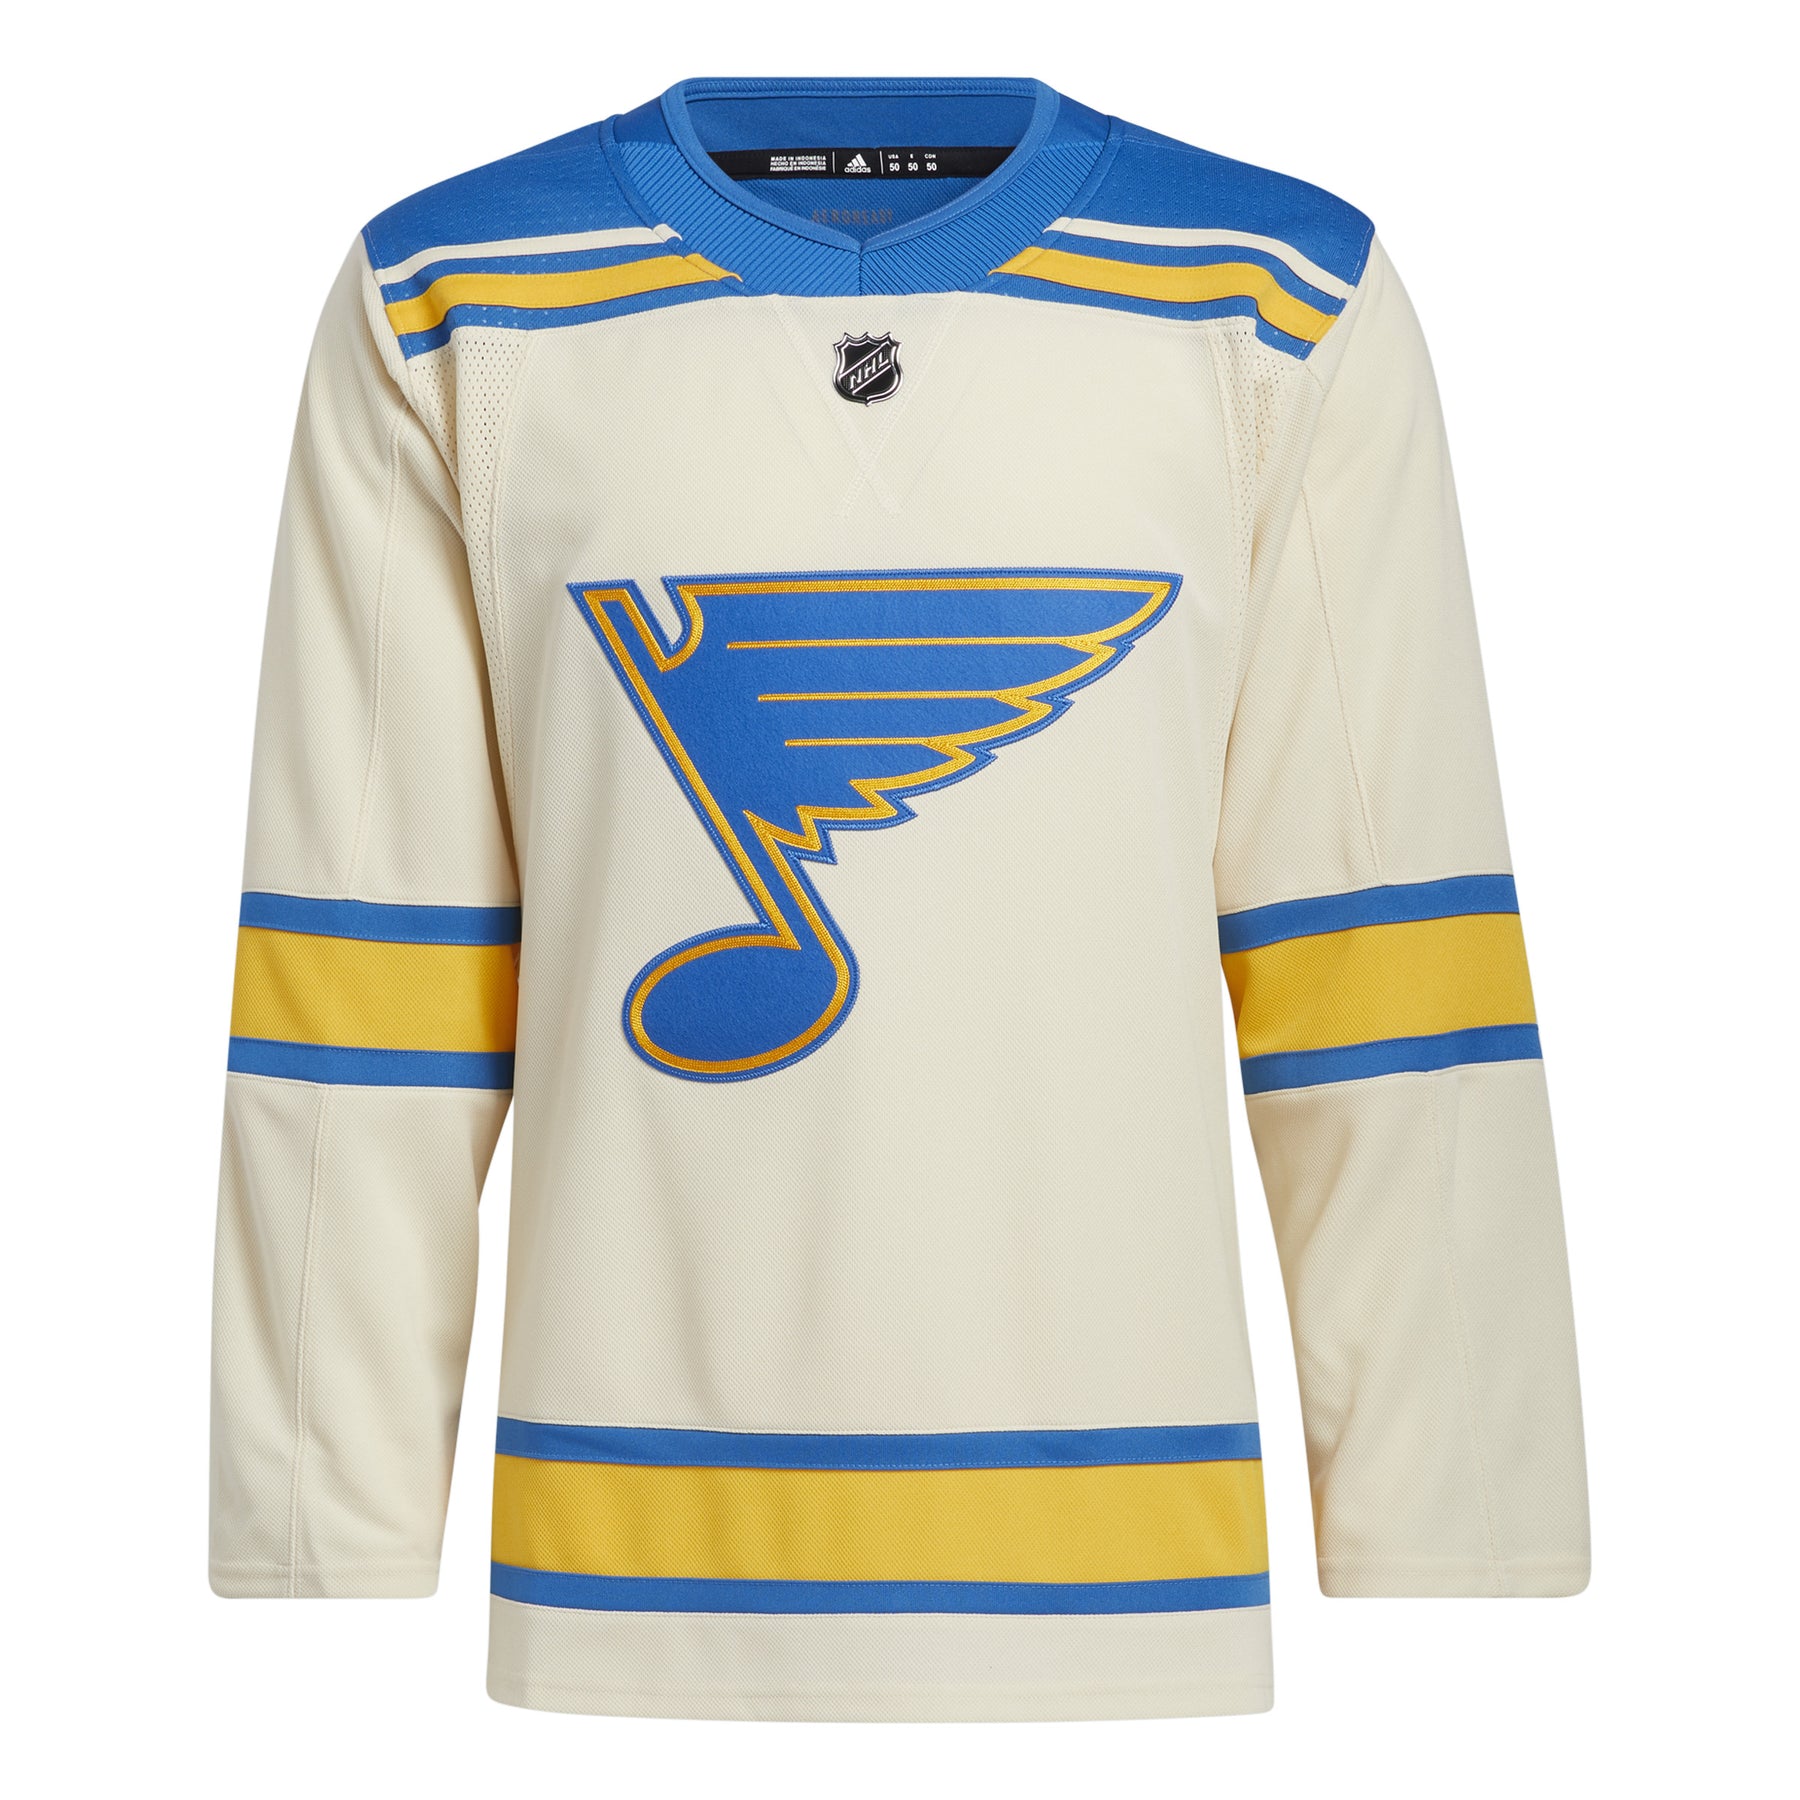 Adidas St. Louis Blues Hat Cap NHL Hockey Blue One Size 2017